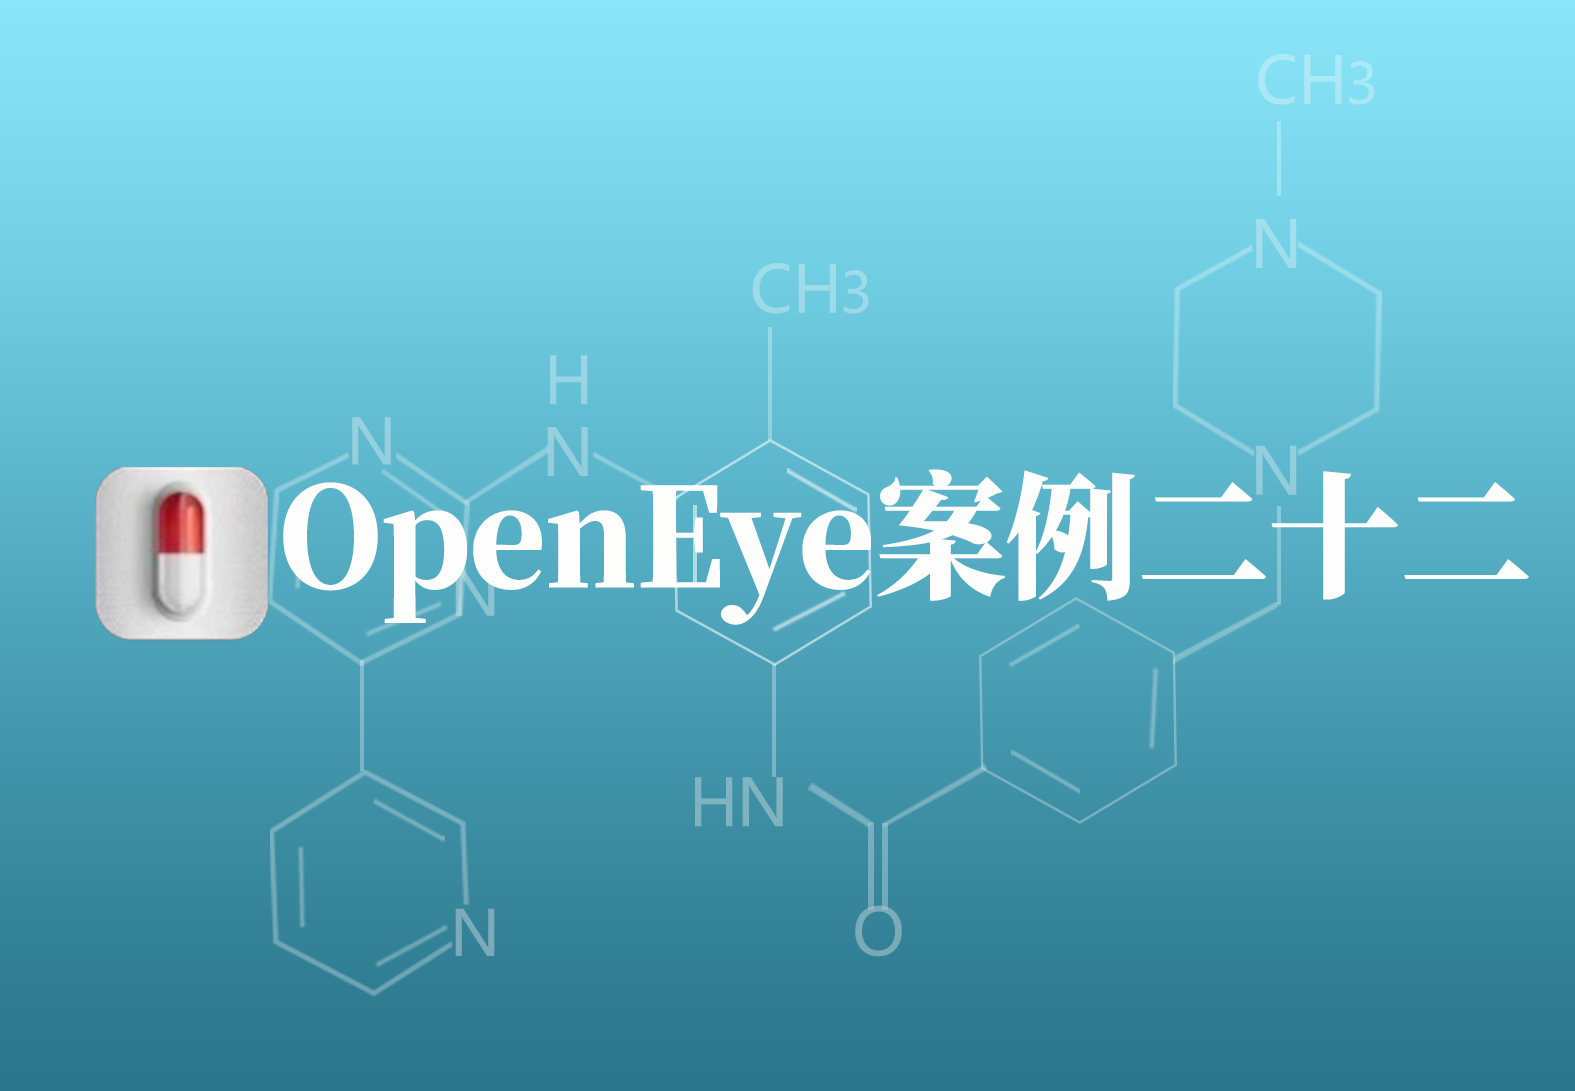 OpenEye应用案例二十二：肌醇-1-磷酸合酶新型抑制剂的发现